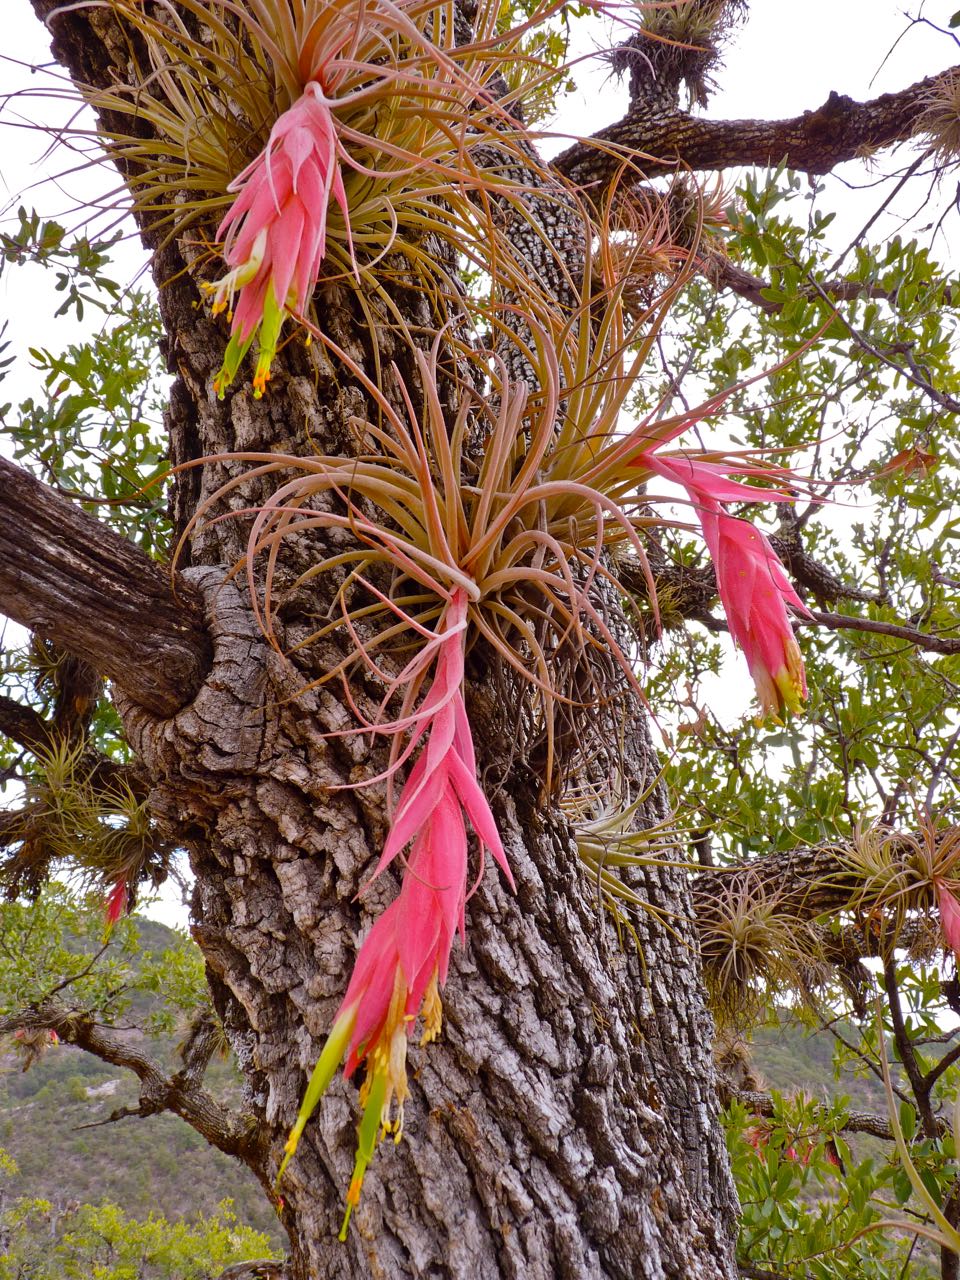 Tropical Epiphytes Flourish on the Bark of Oak Trees.